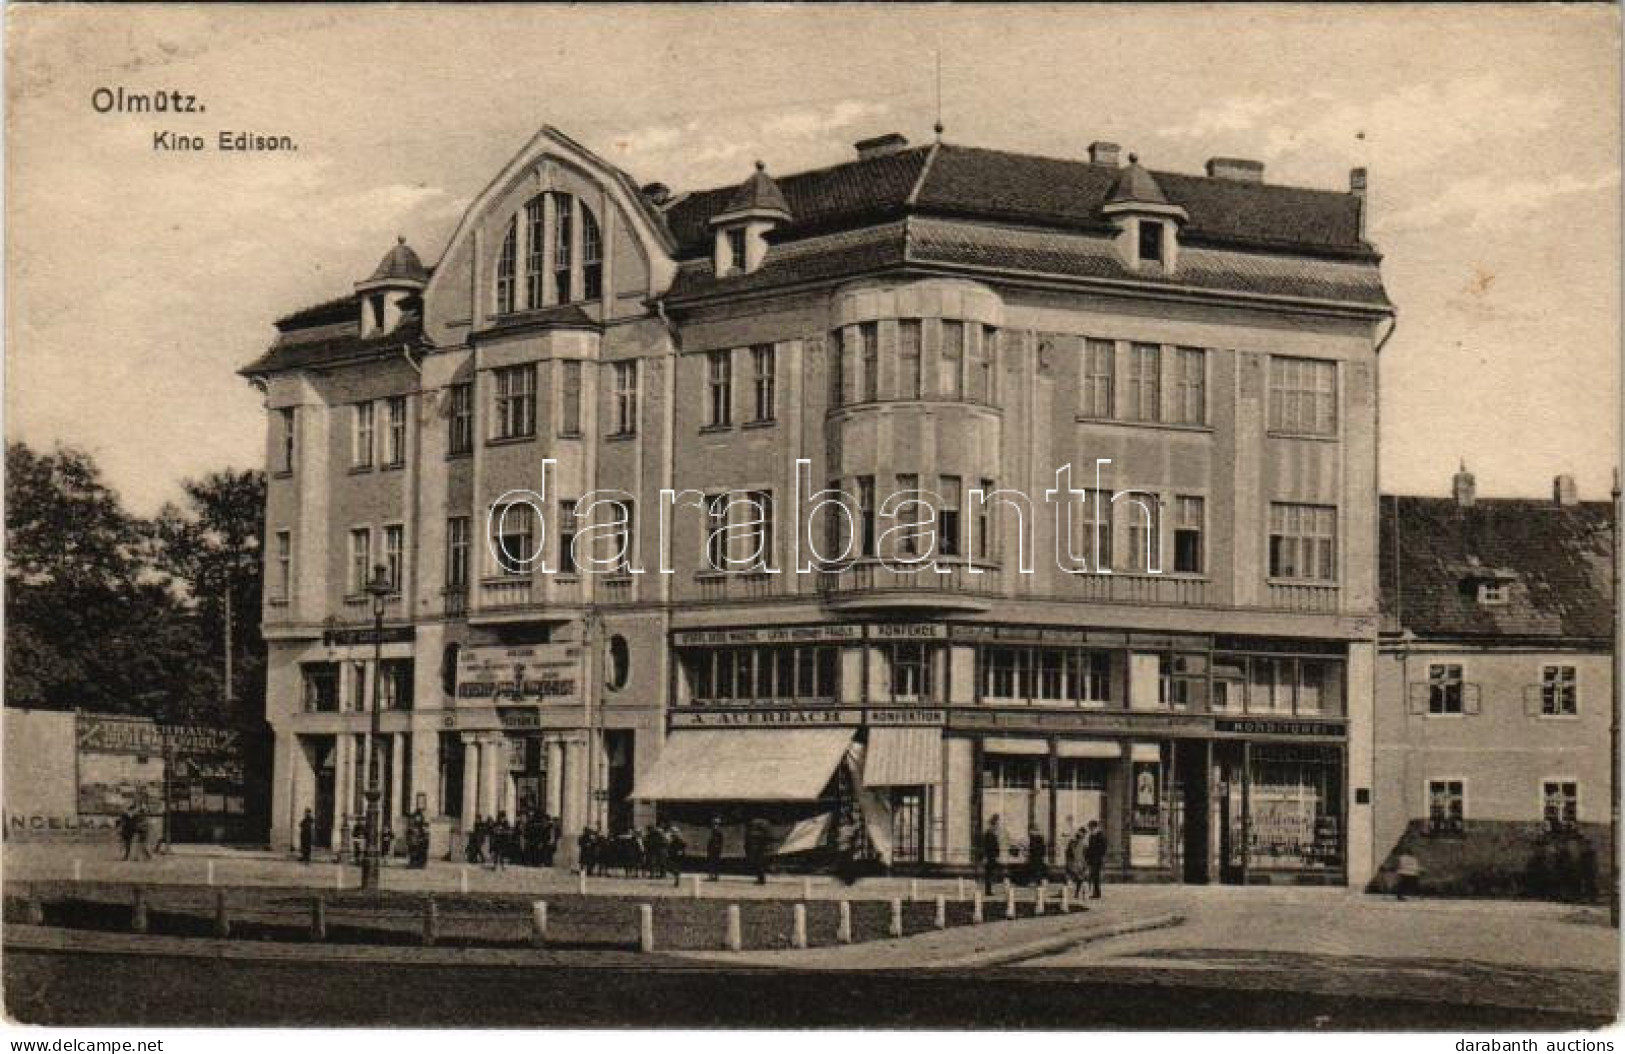 T2/T3 1915 Olomouc, Olmütz; Kino Edison, A. Auerbach Konfektion, Willy Weise Konditorei / Cinema, Shops, Confectionery ( - Unclassified